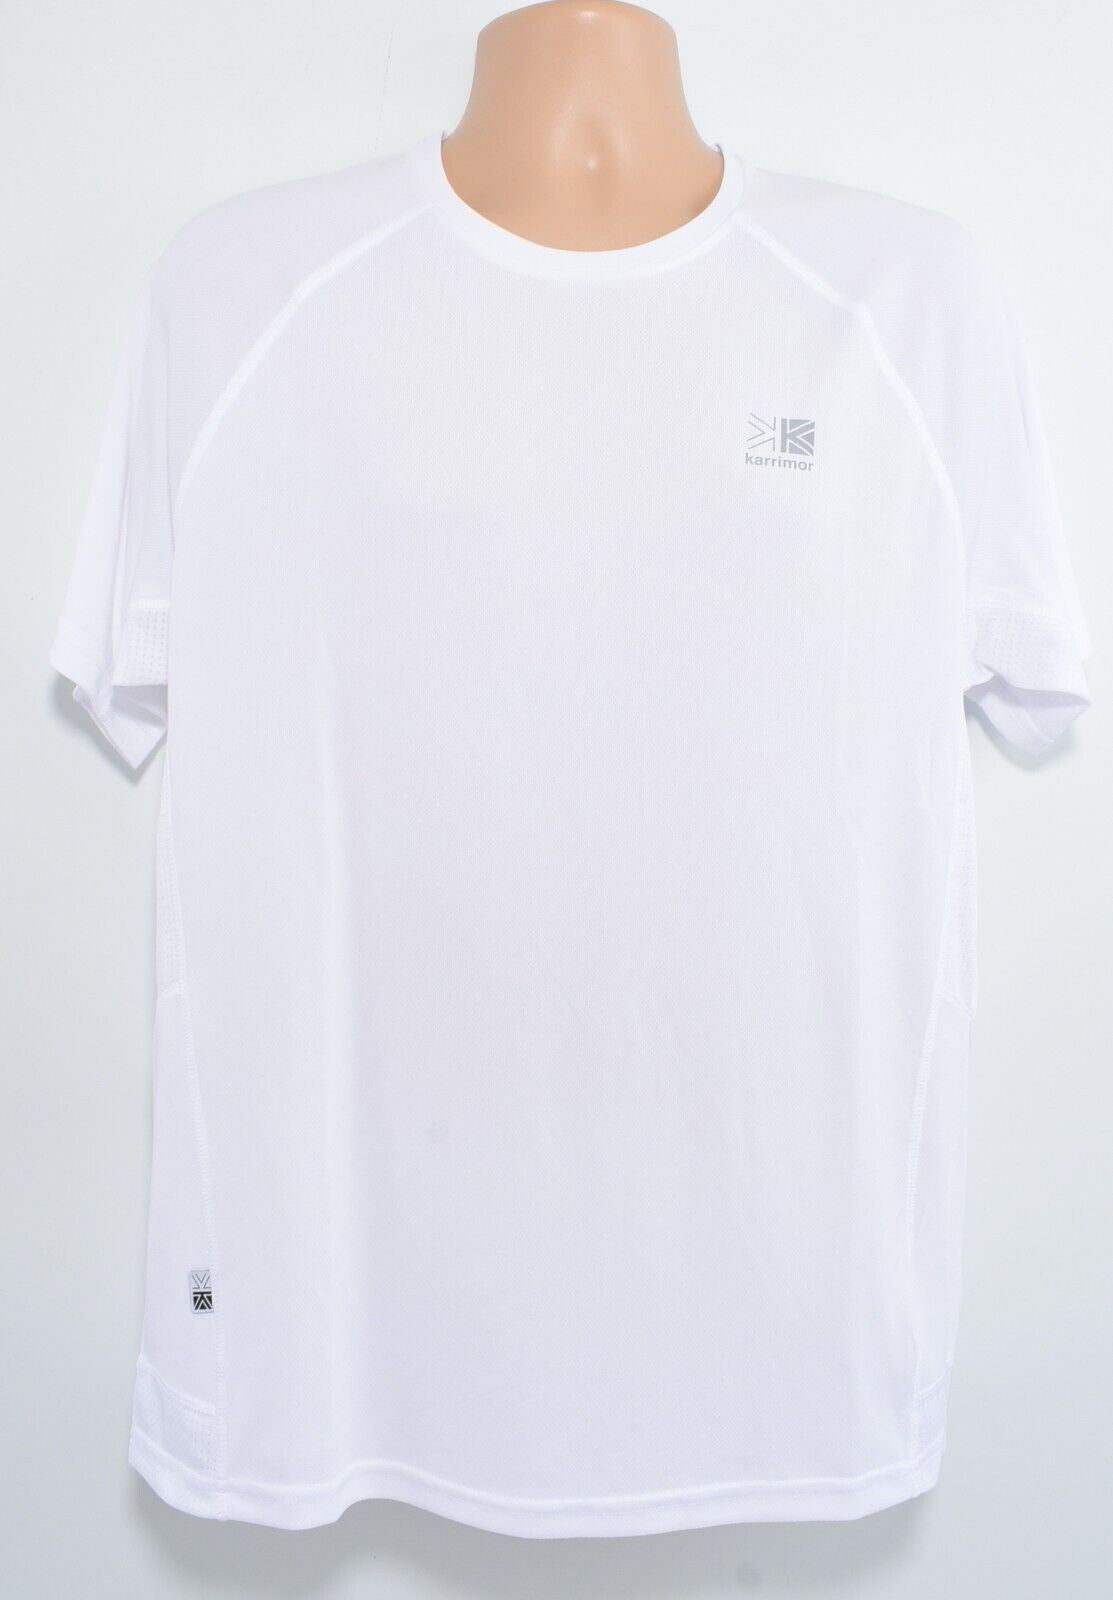 KARRIMOR Mens Short Sleeve Running Tee, Activewear T-shirt, White, size L